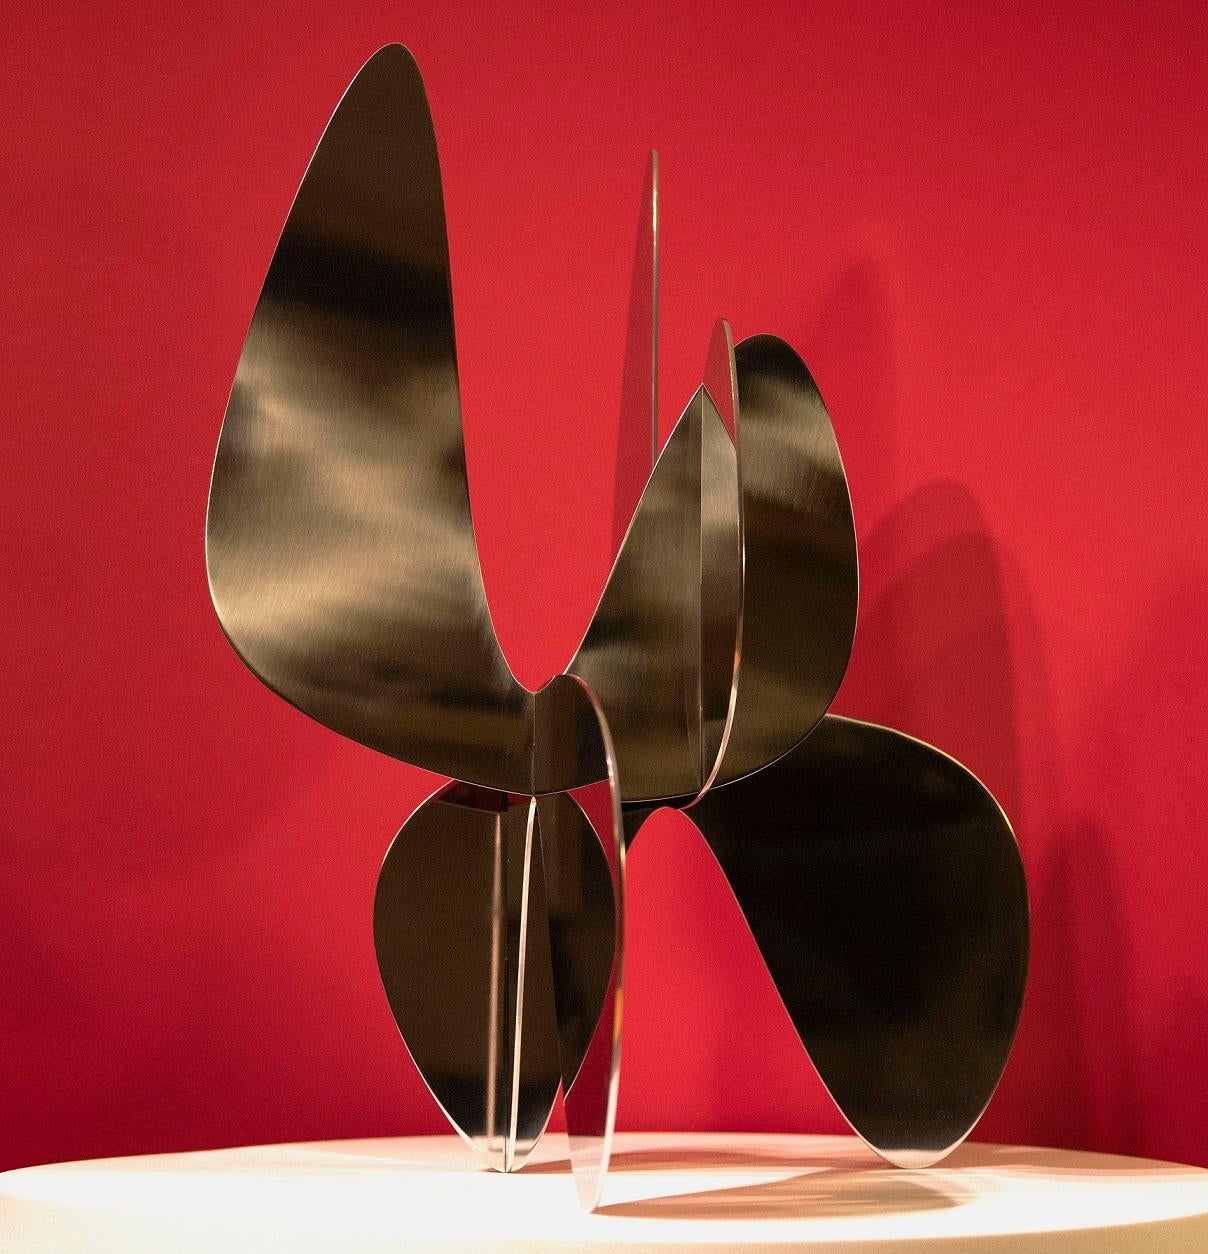 Abstract Sculpture Alejandro Vega Beuvrin - Barricada n°9 aip M2 de A. Vega Beuvrin - sculpture abstraite en acier inoxydable